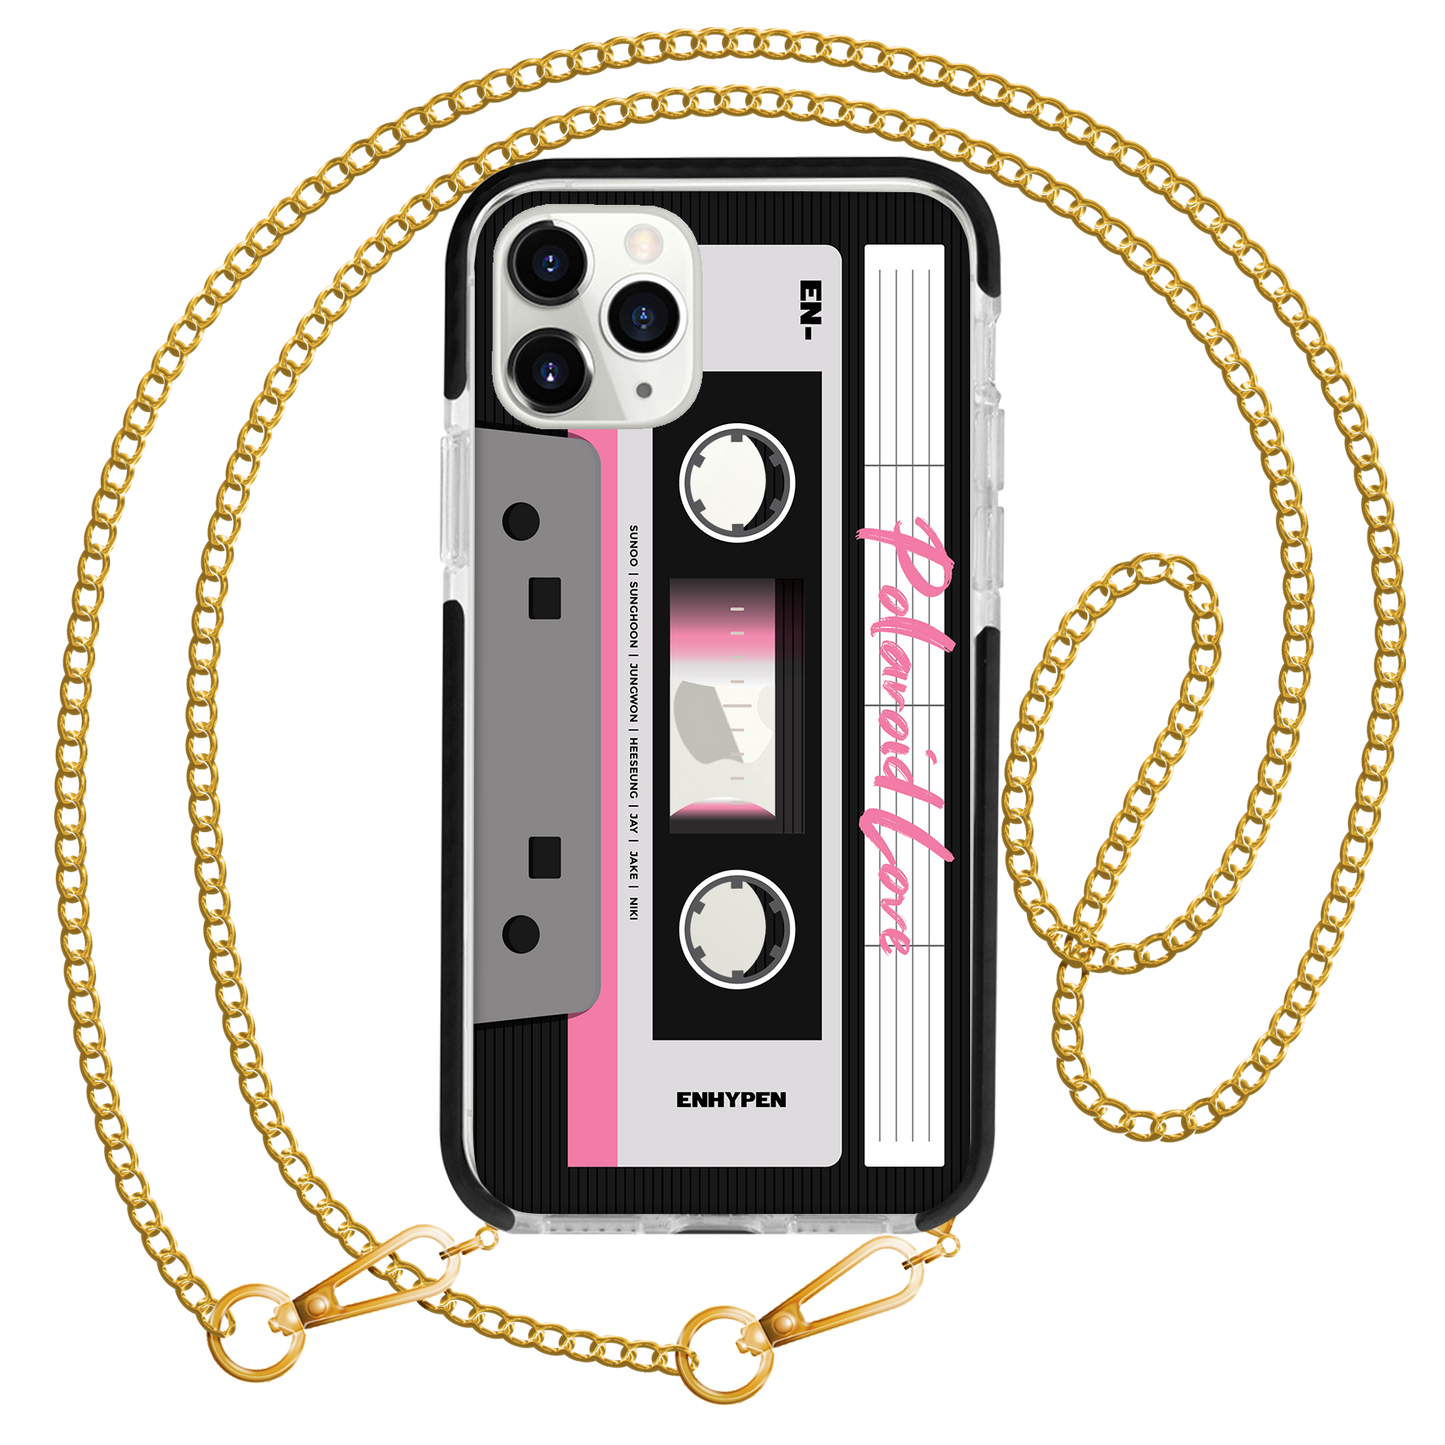 iPhone - Enhypen Cassette